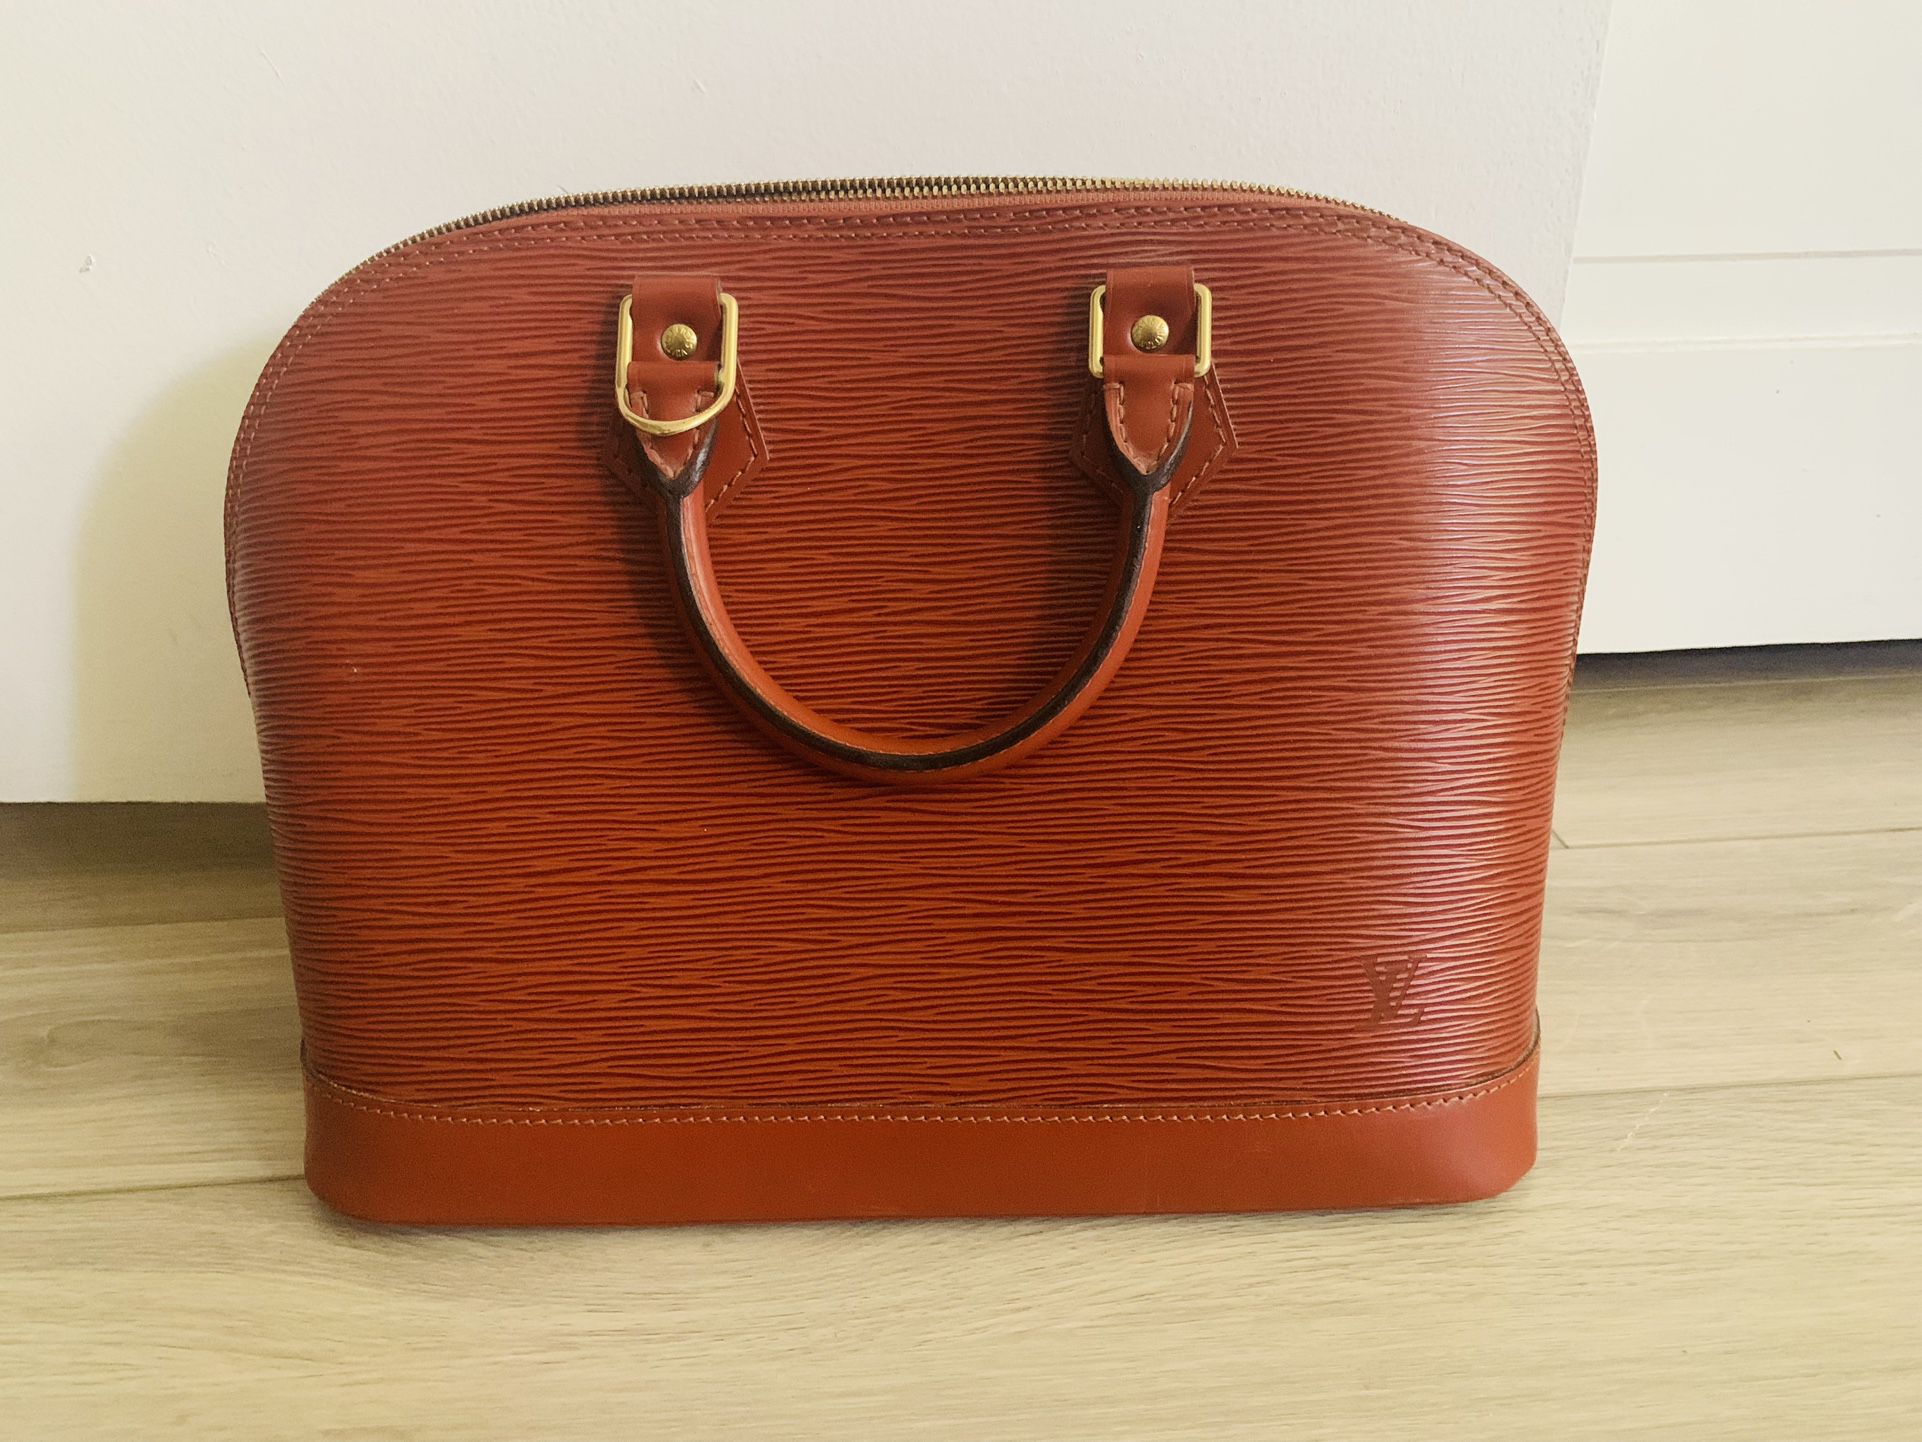 Authentic Louis Vuitton Louis Vuitton Kenyan Fawn Epi Leather Alma PM Bag NWOT